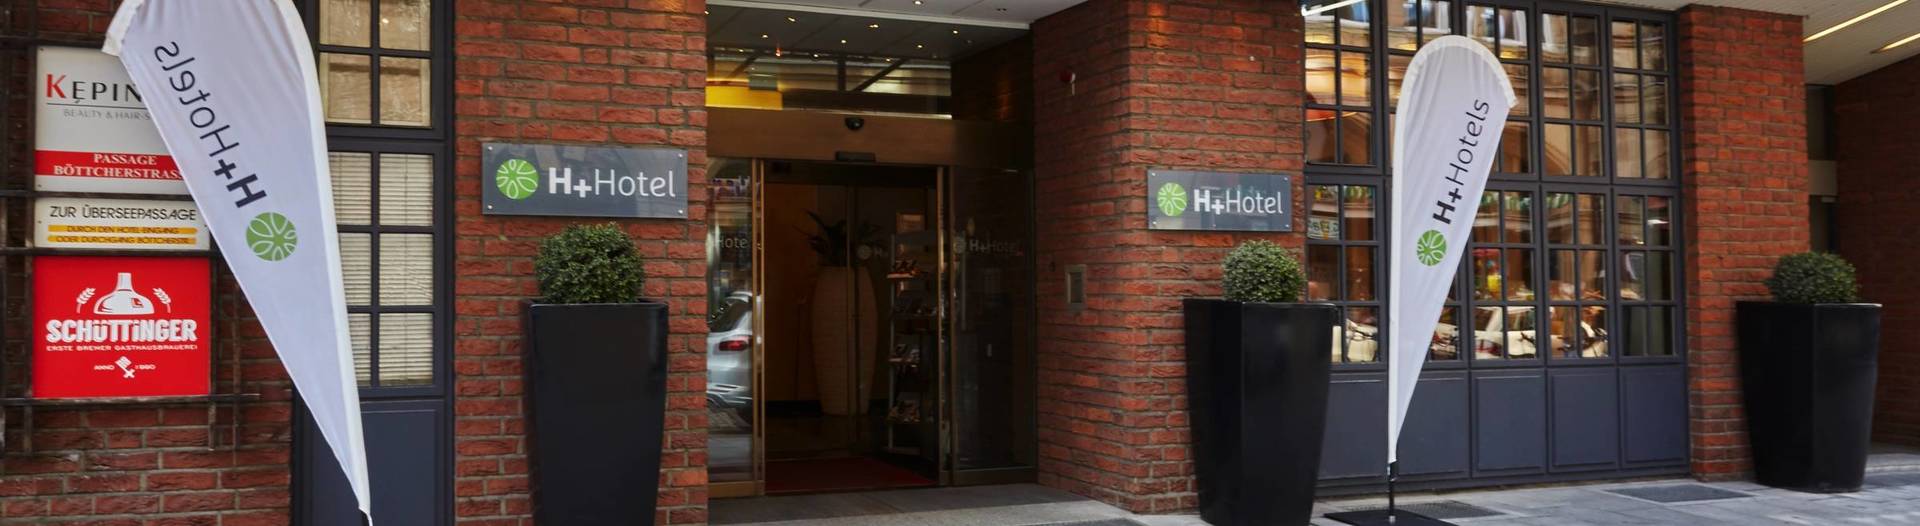 Hotelbeoordeling: H+ Hotel Bremen